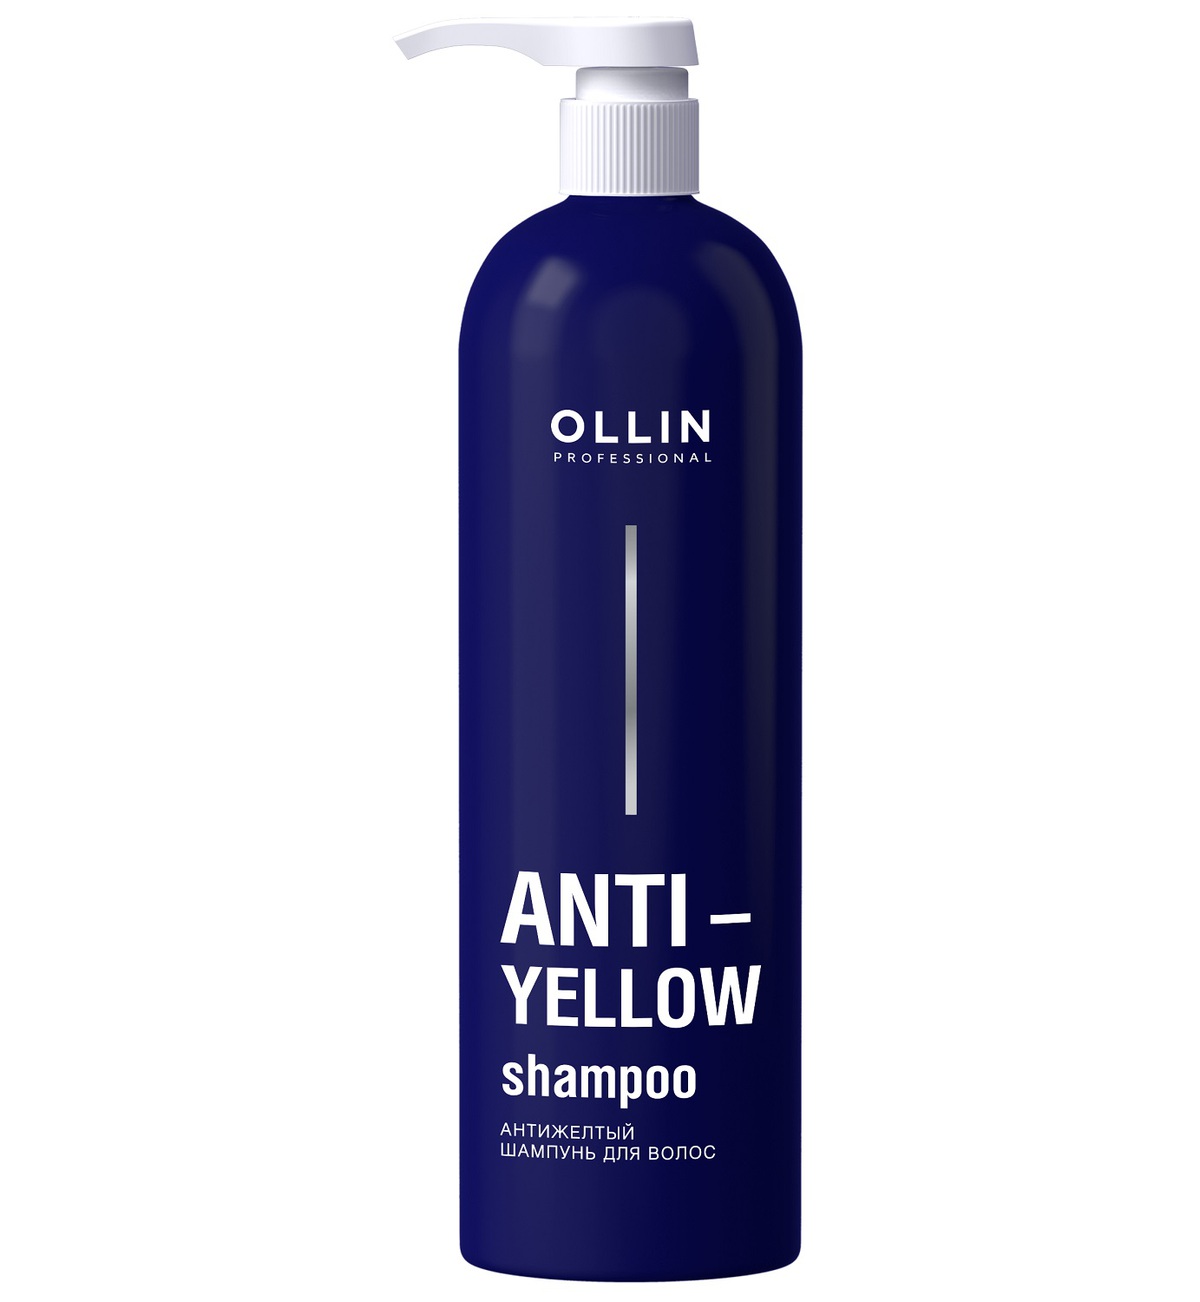 Ollin Professional Антижелтый шампунь для волос Anti-Yellow Shampoo, 500 мл (Ollin Professional, Anti-Yellow) антижелтый бальзам для волос ollin professional anti yellow 500 мл